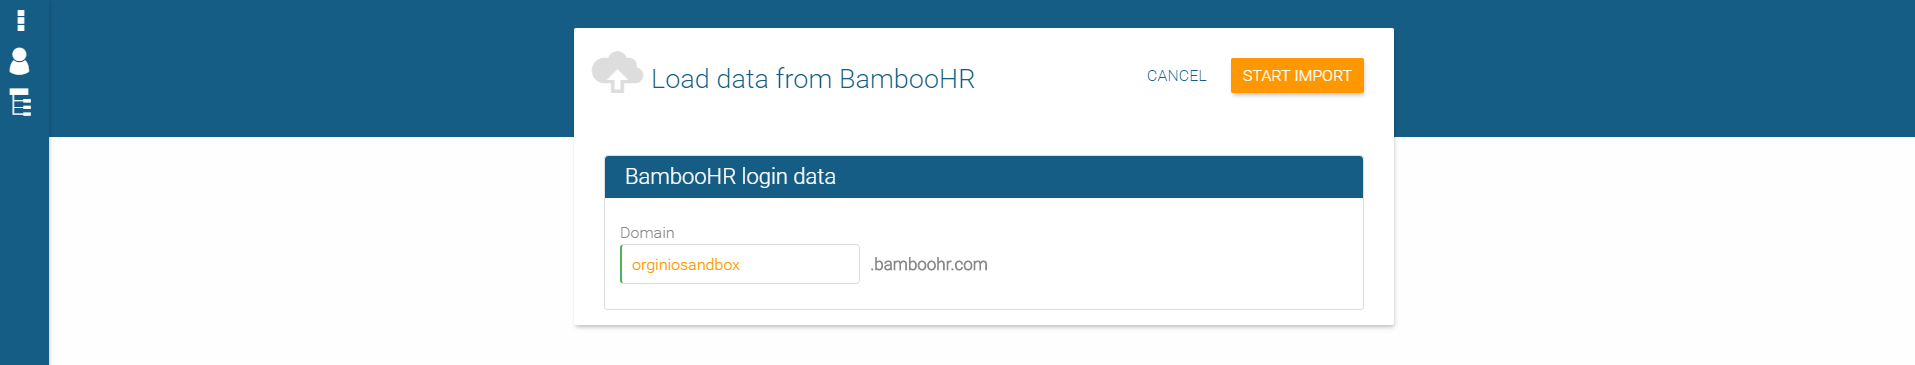 Upload data from BambooHR to orginio